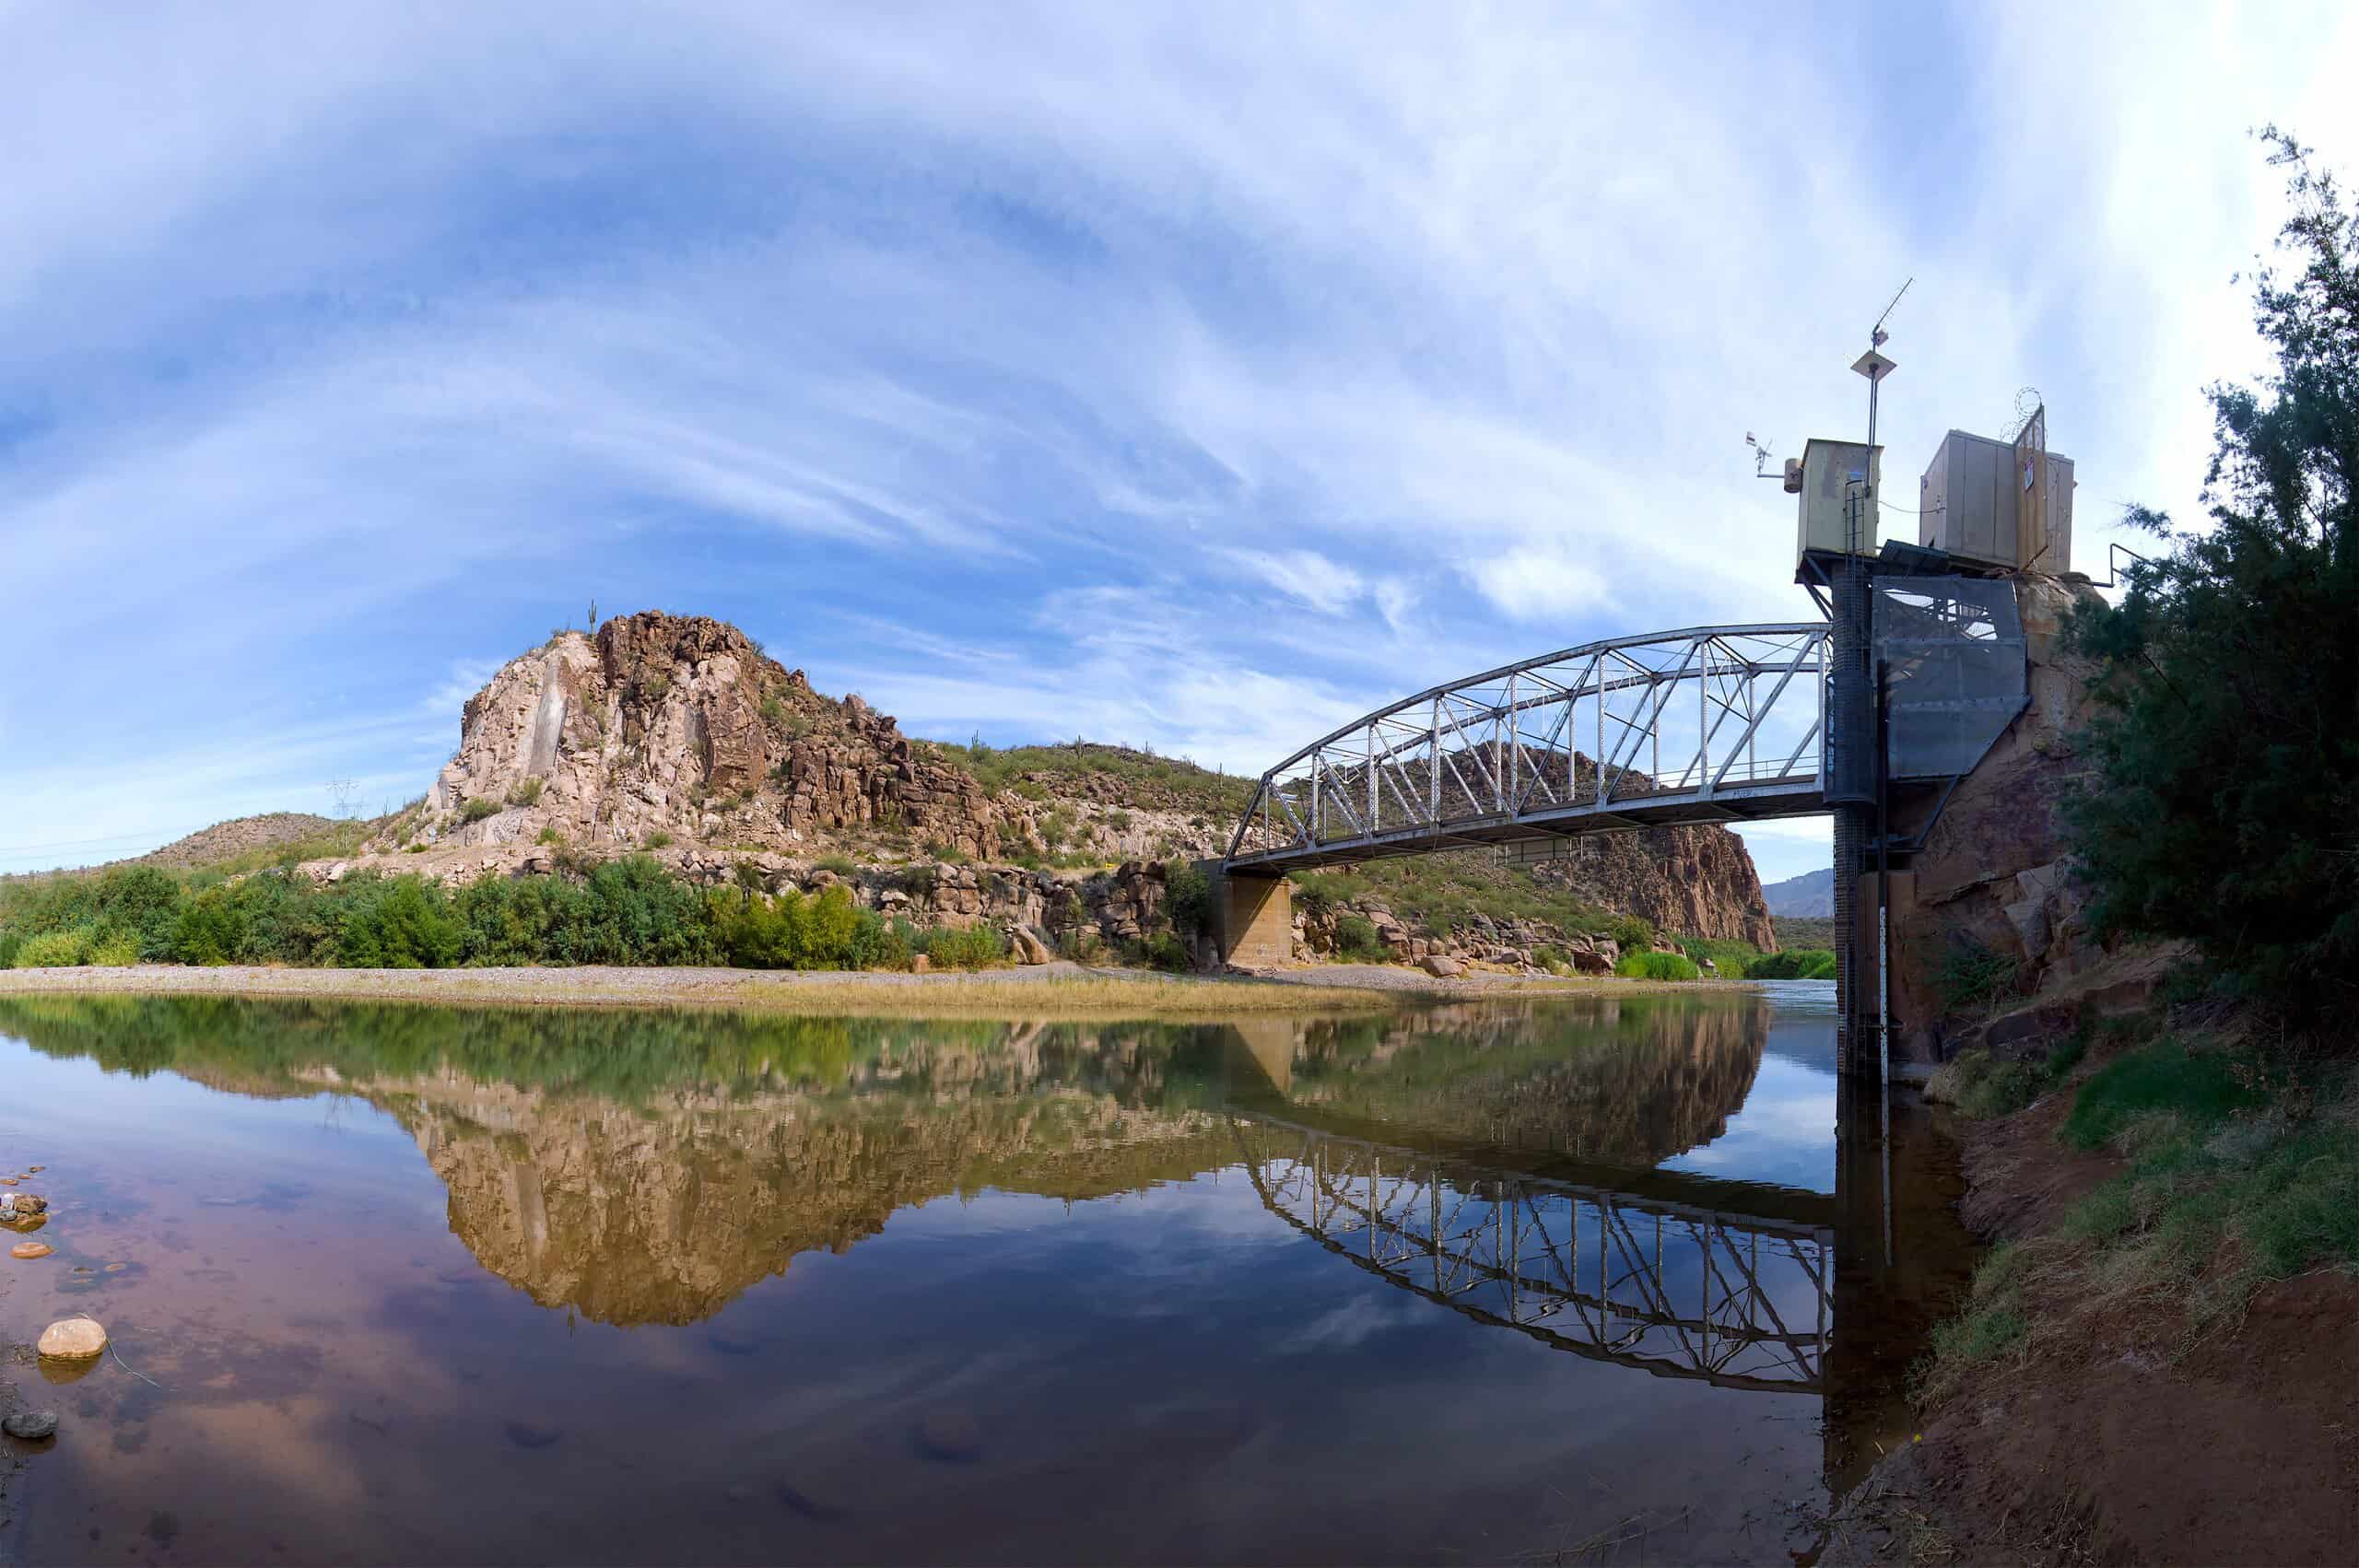 Bridge Over Salt River, Arizona by Alan Stark from Goodyear, AZ, United States